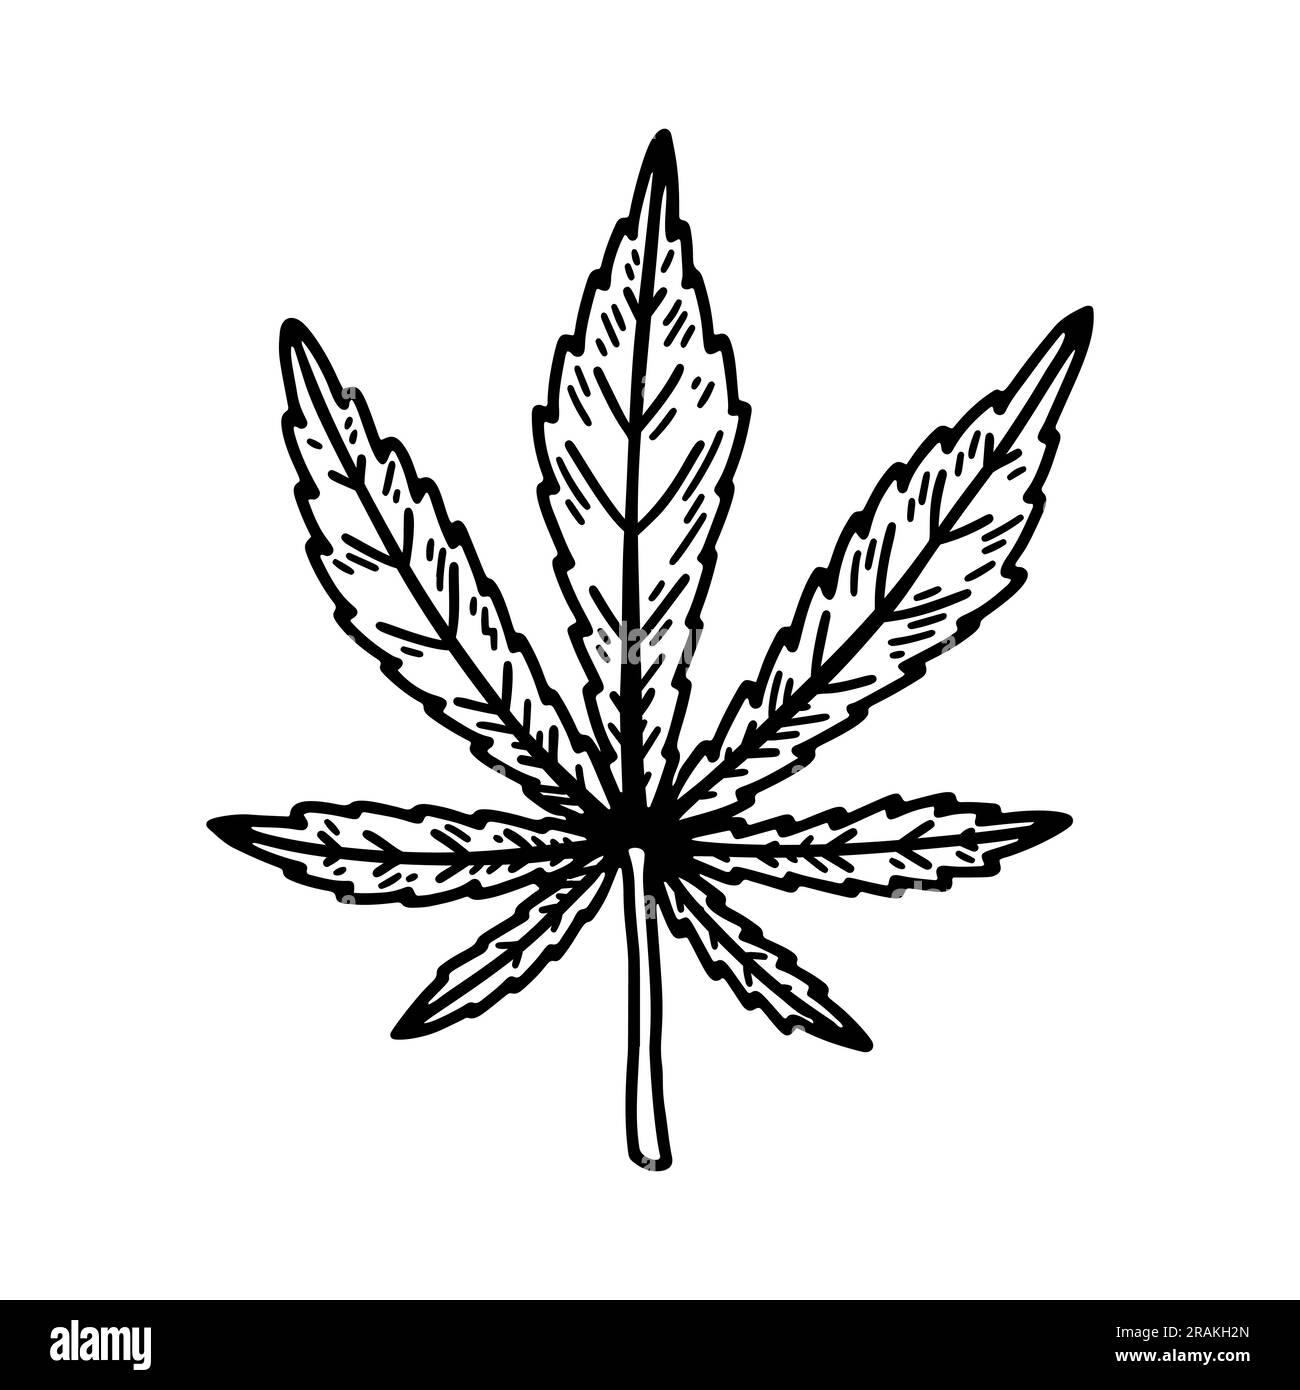 Cannabis leaf sketch. Marijuana botanical drawing. Hand drawn vector illustration Stock Vector